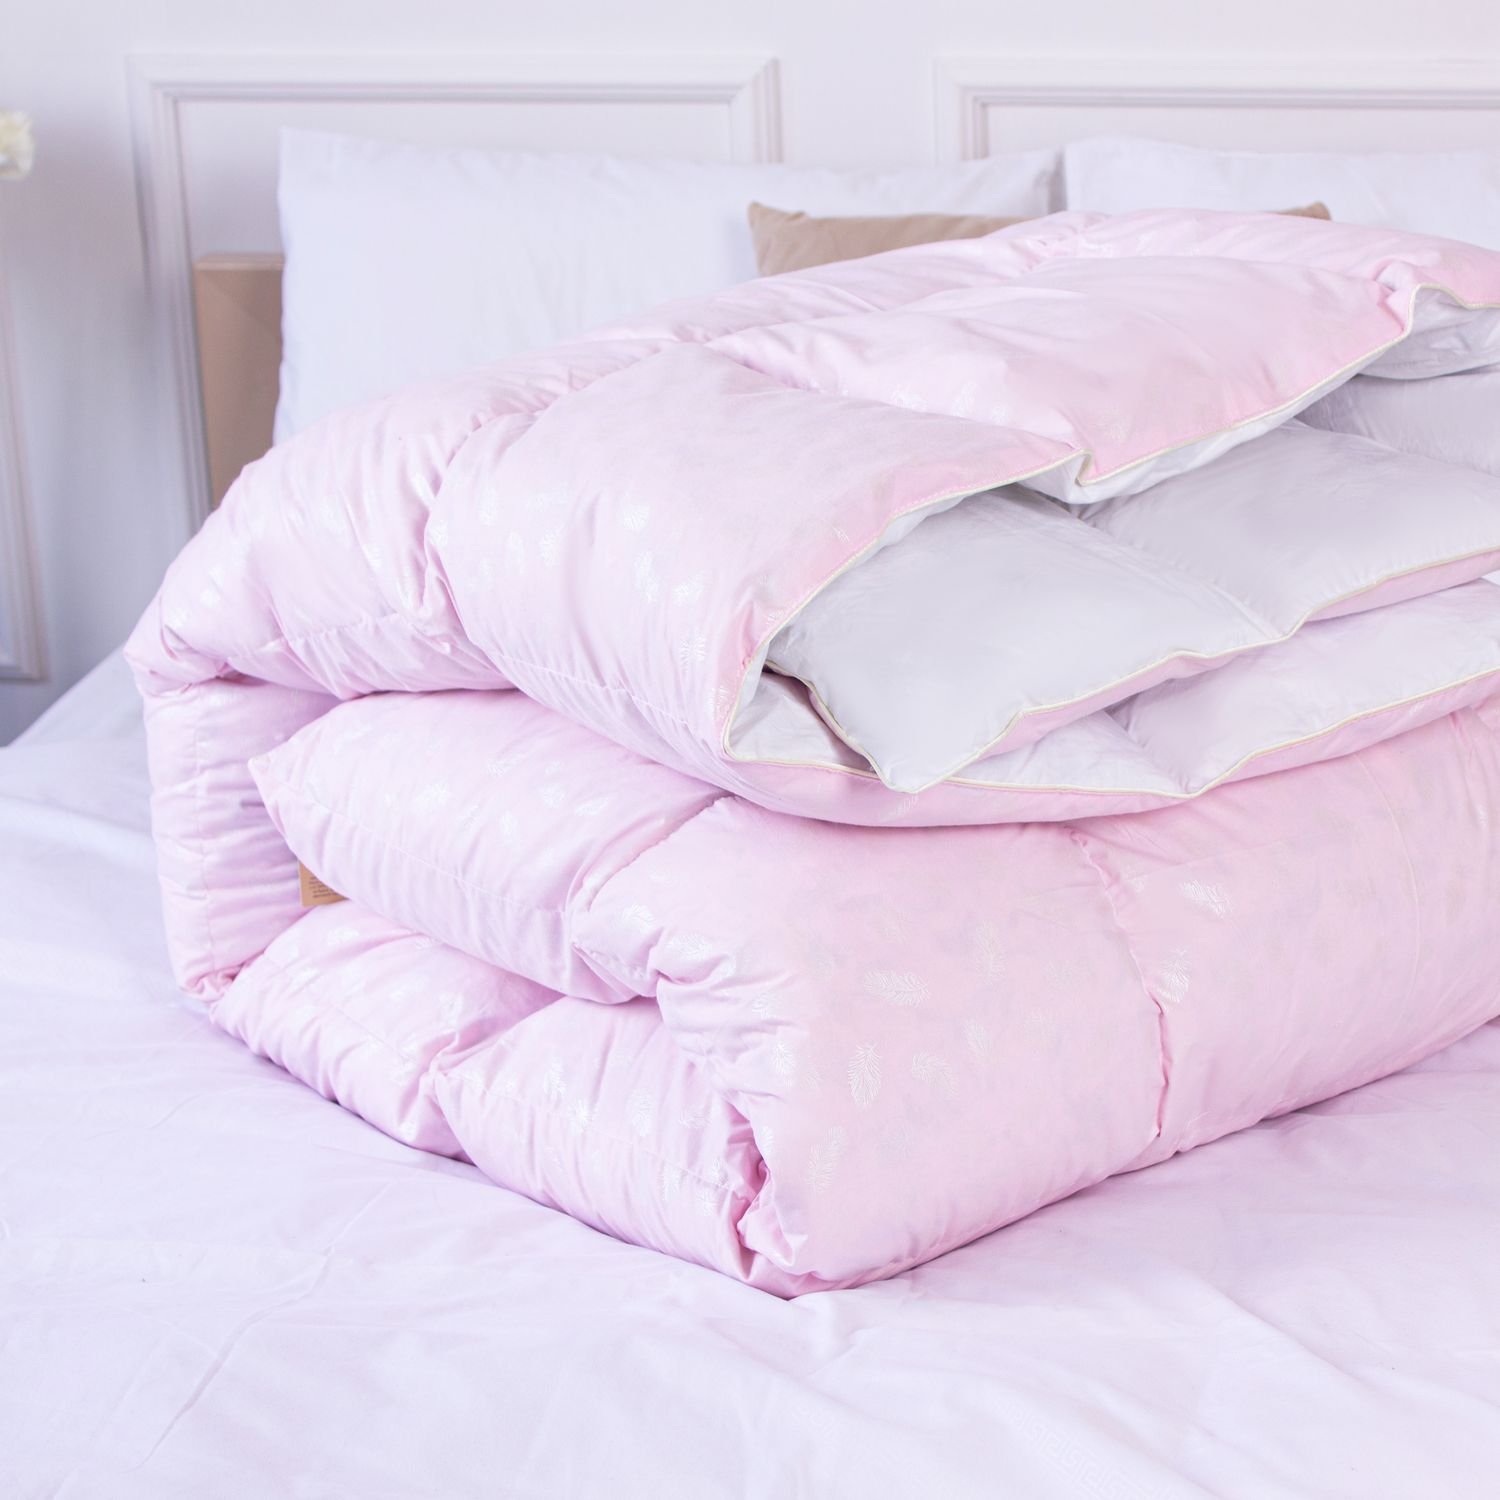 Одеяло пуховое MirSon Karmen №1838 Bio-Pink, 90% пух, двуспальное, 205x172, розовое (2200003013504) - фото 3